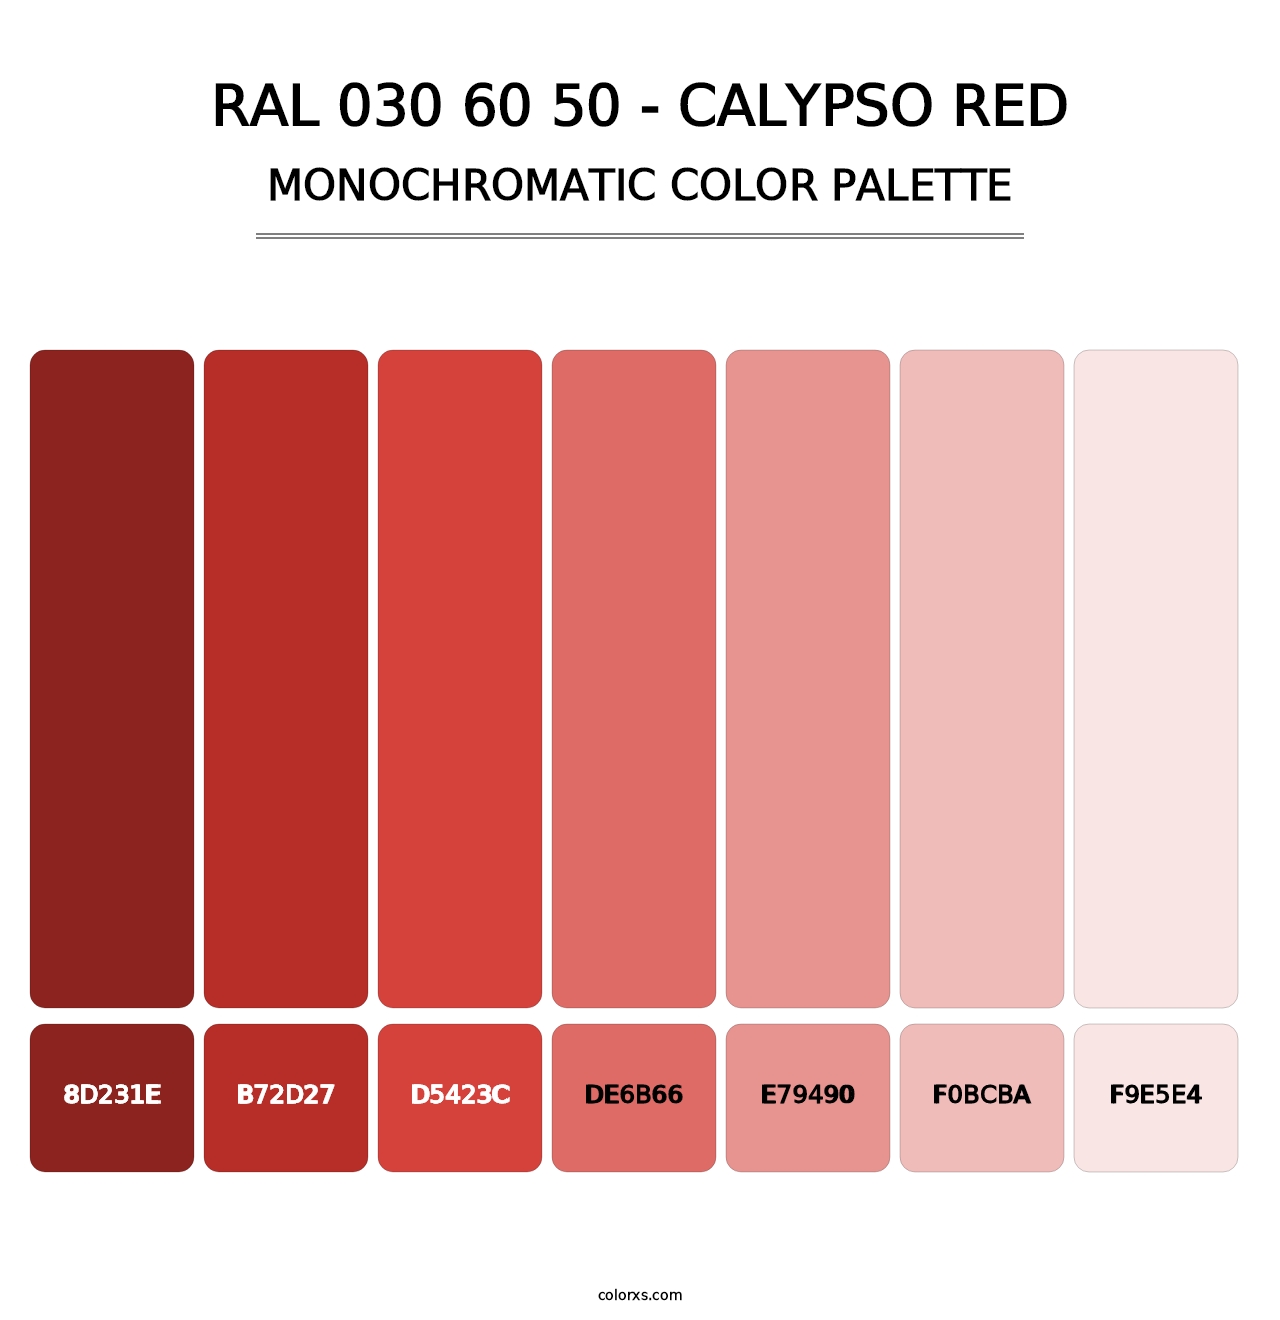 RAL 030 60 50 - Calypso Red - Monochromatic Color Palette